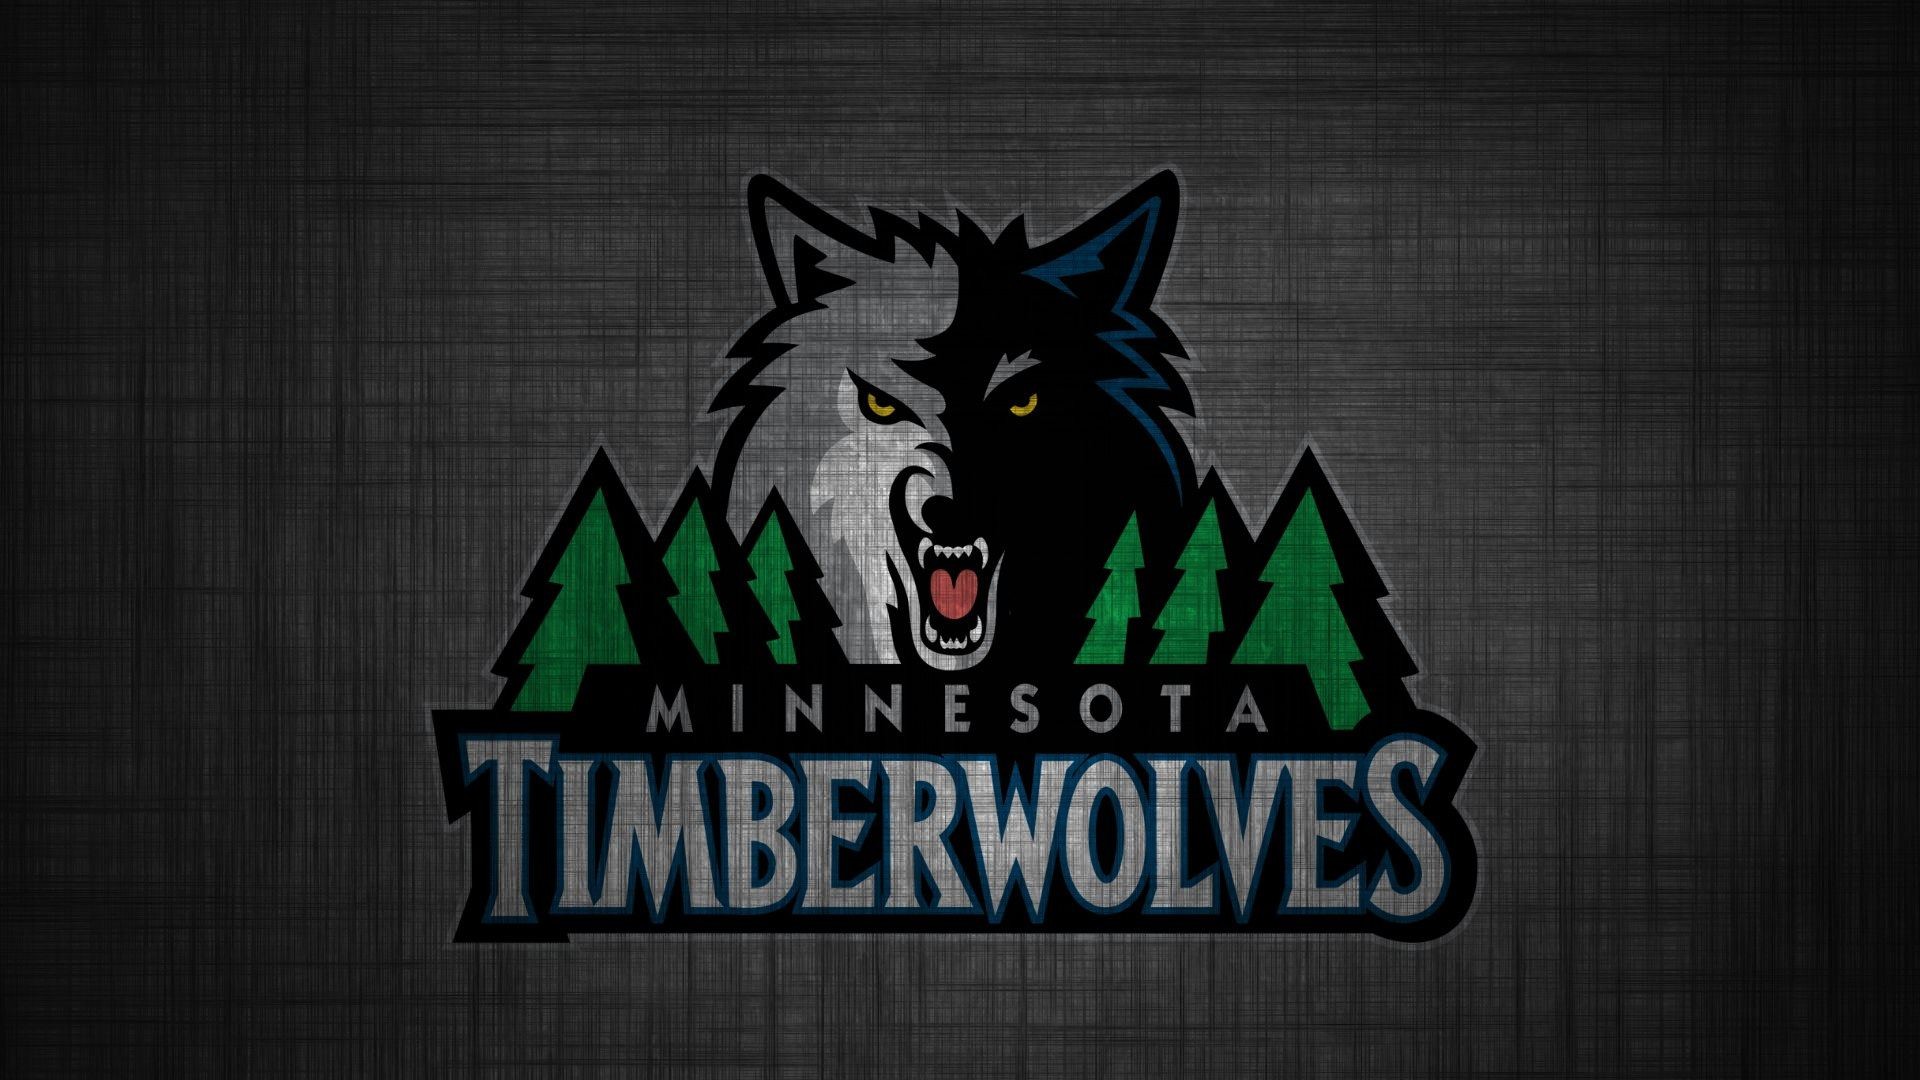 Minnesota Timberwolves wallpaper hd free download